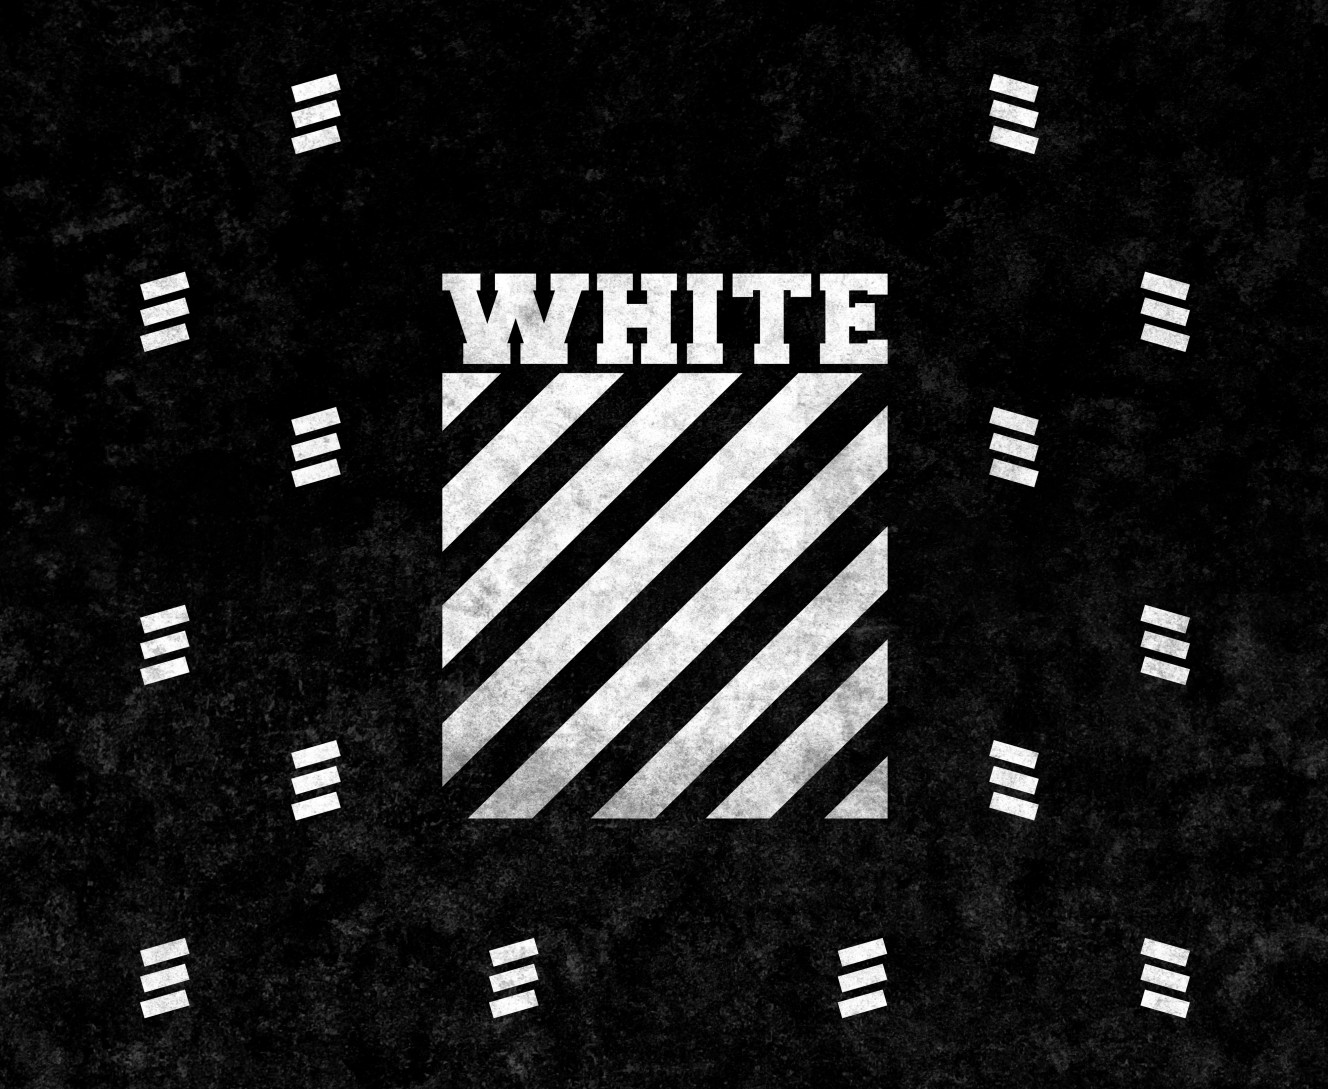 OFF WHITE (8)